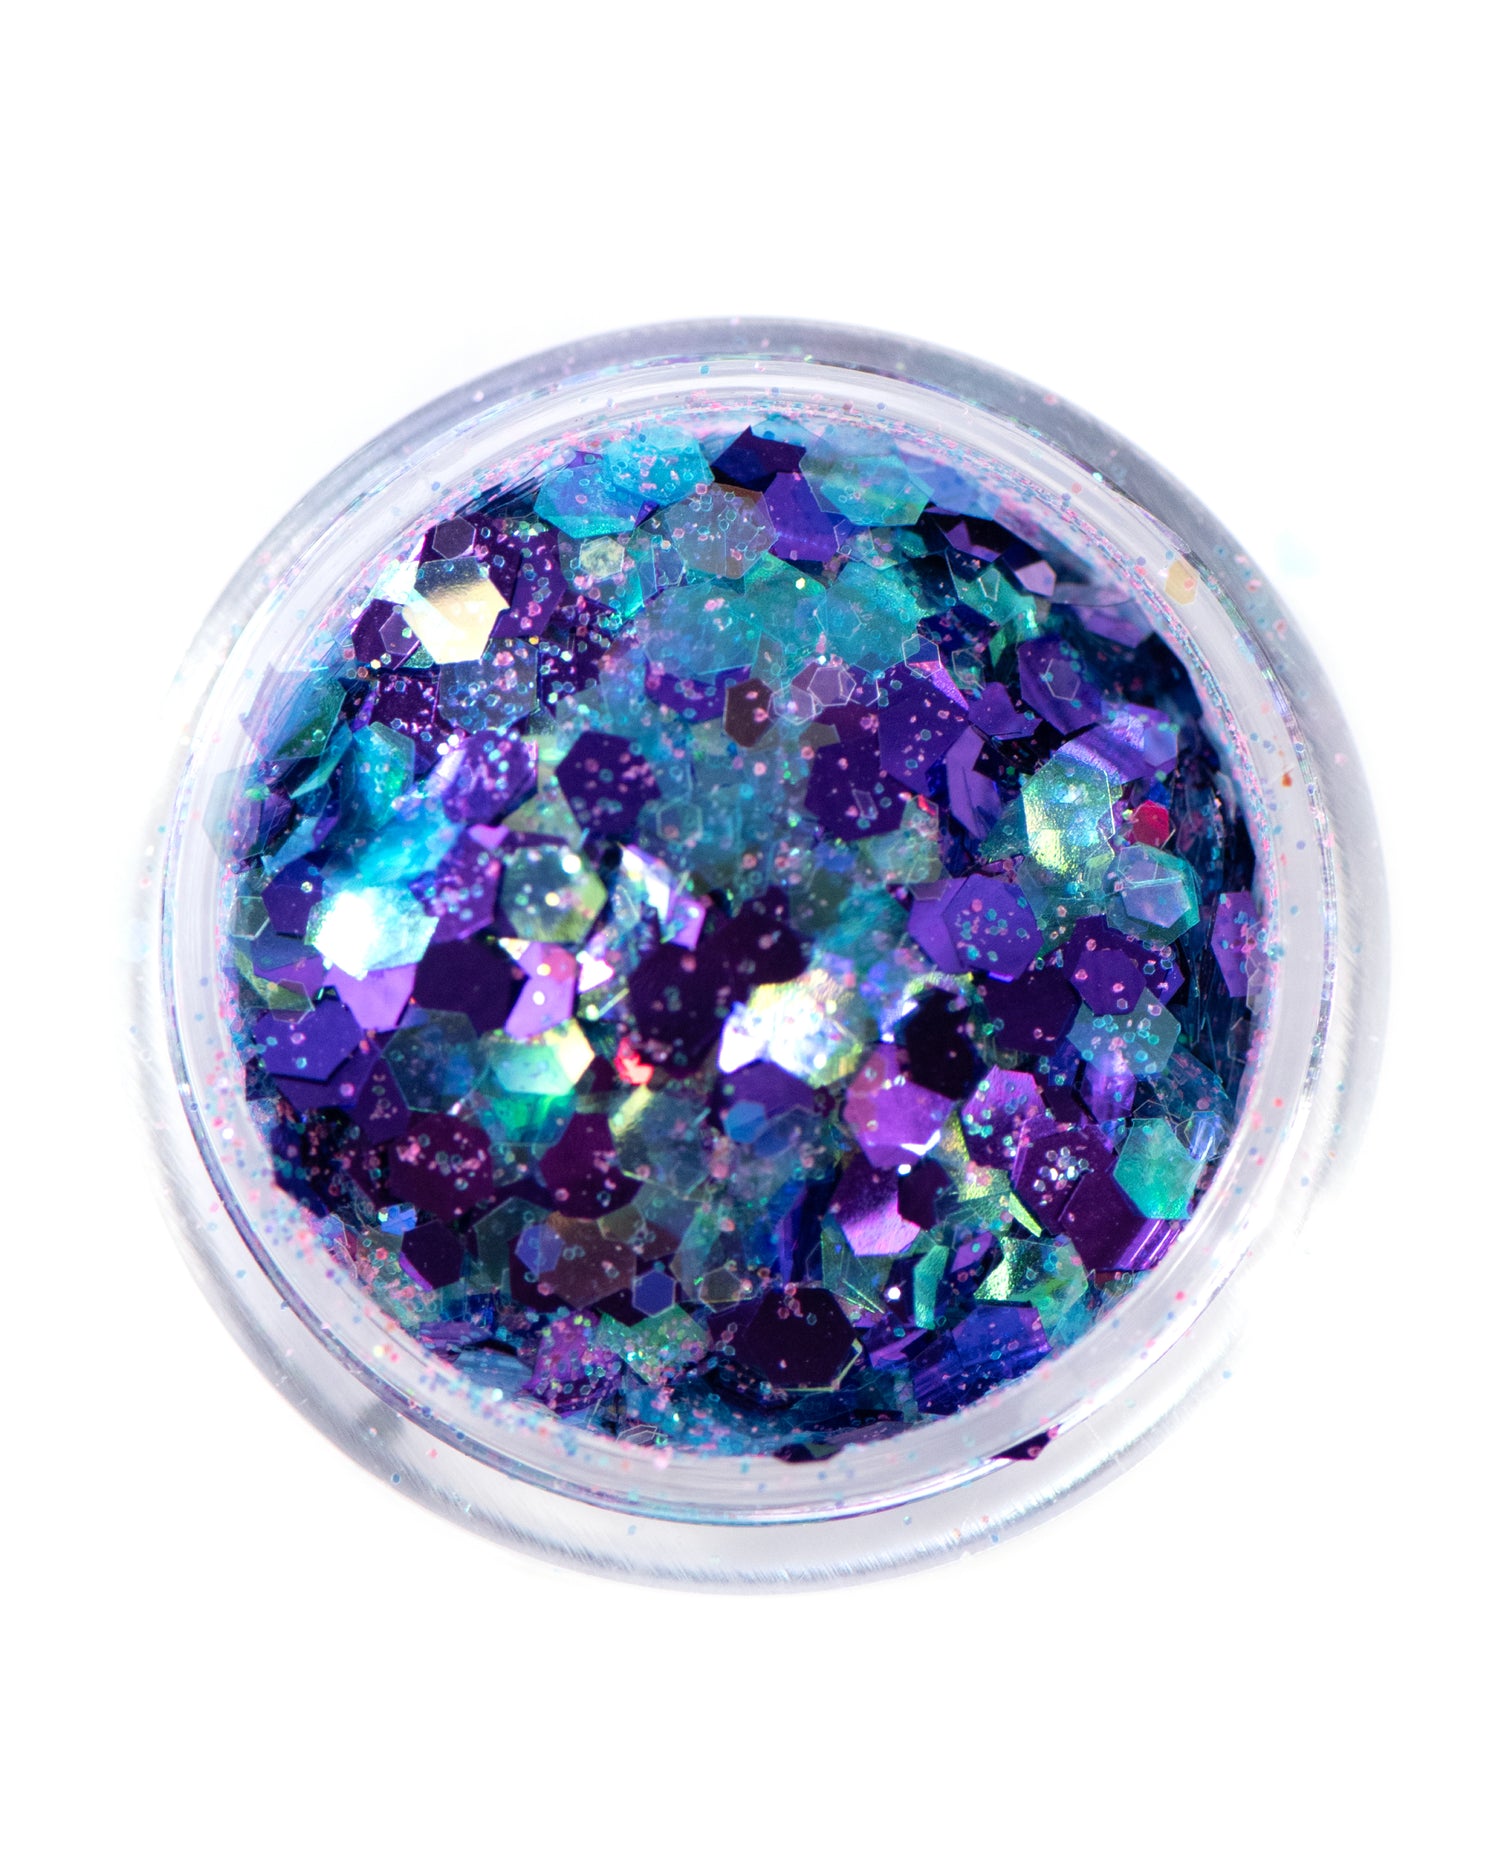 Tea Party - Purple and Aqua Chunky Glitter - Lunautics Chunky Glitter